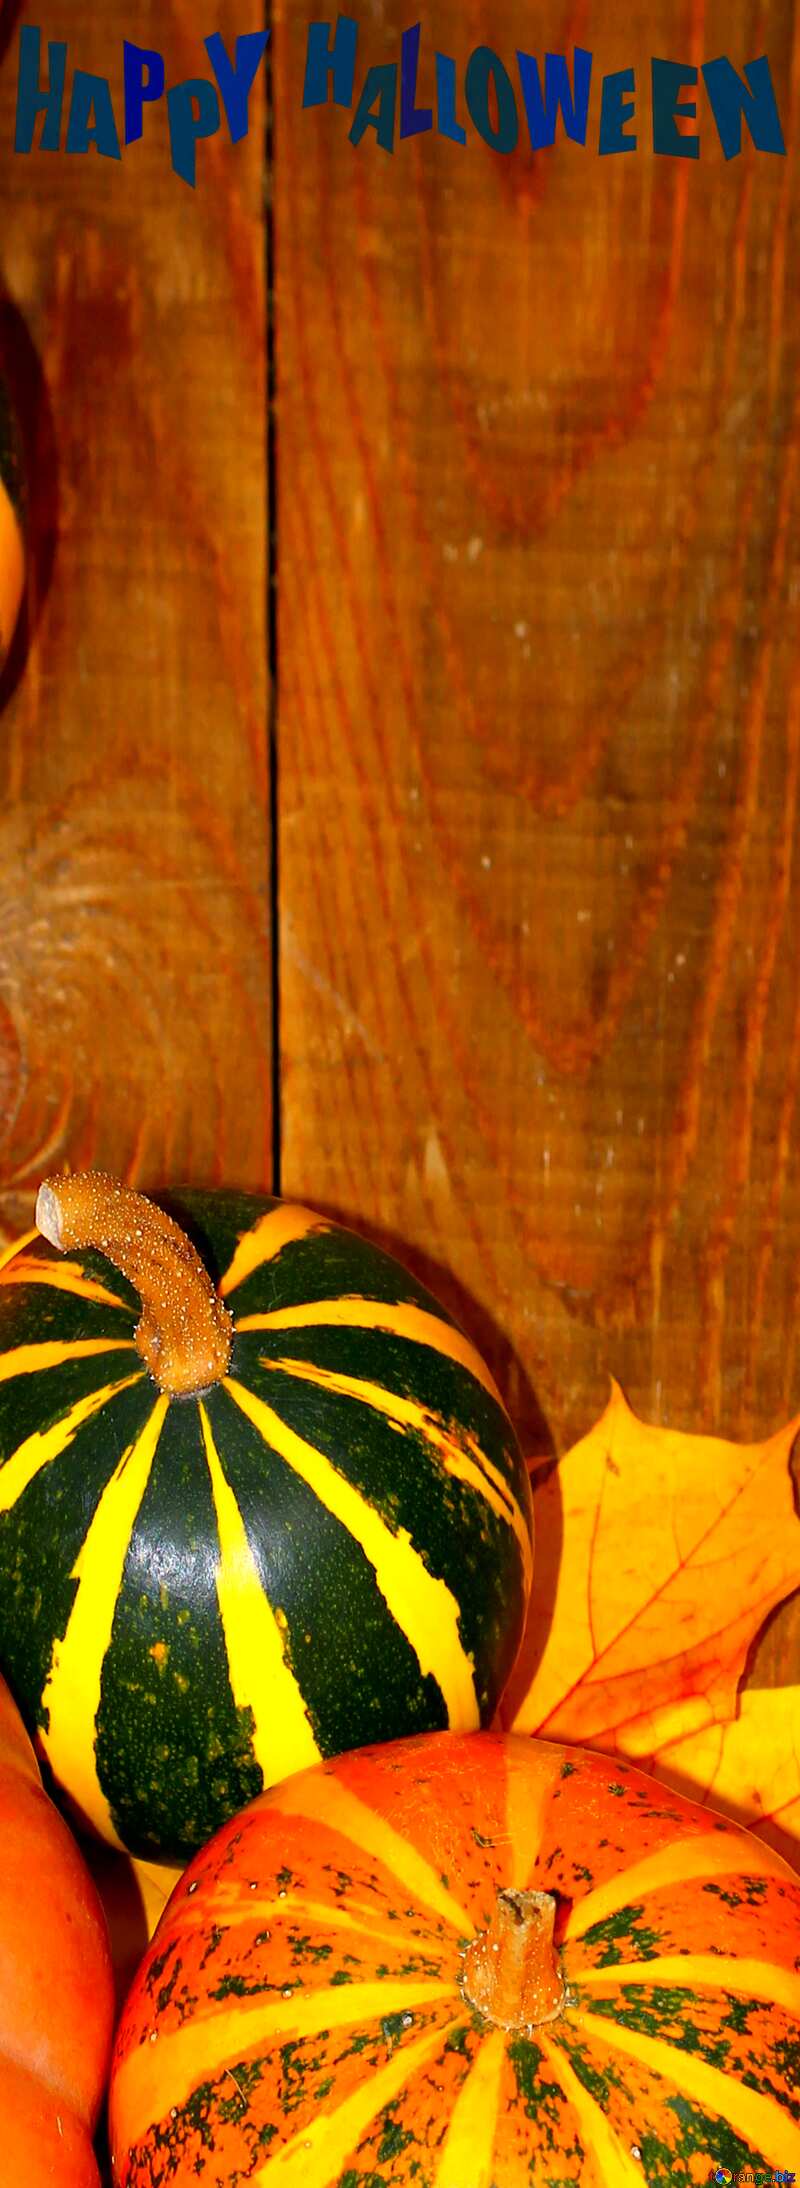 Autumn background with pumpkins happy halloween vertical background №35214